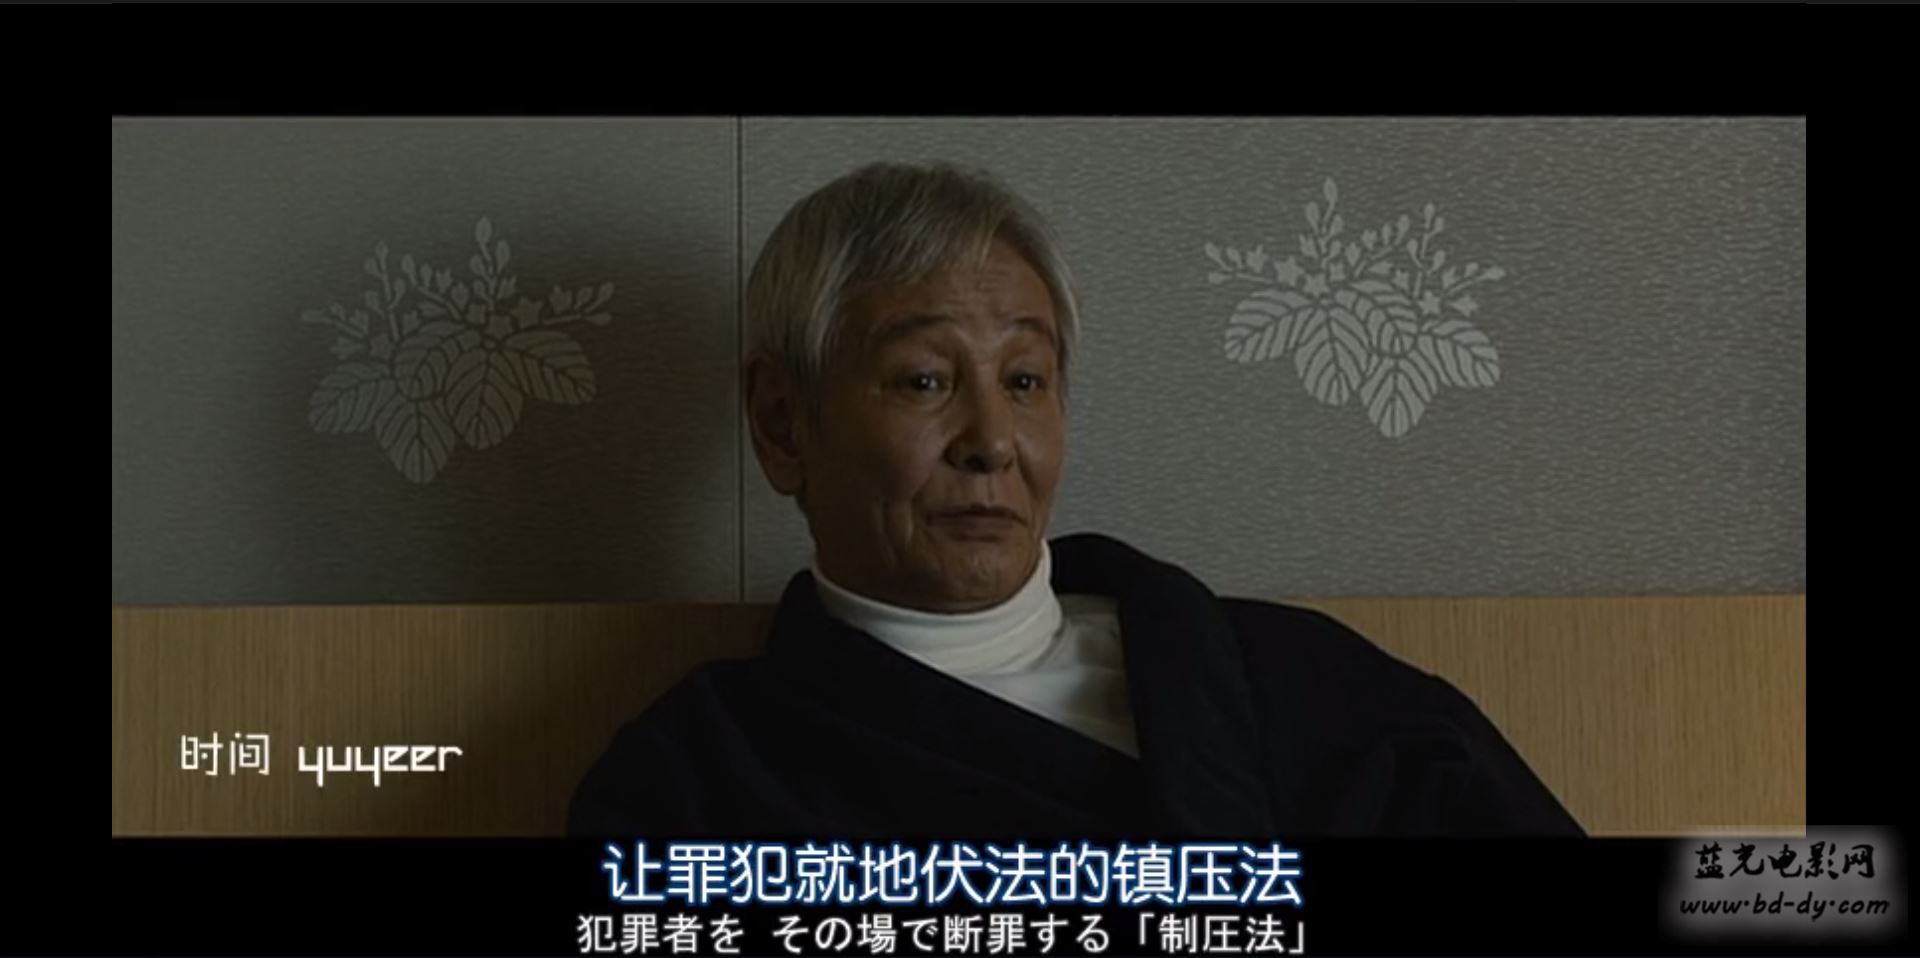 《S-最后的警官 电影版》2015日本动作犯罪.DVD.中日双字截图;jsessionid=NjCRRDLjNtSi8_5ta1YYCwOZ2h9B-J83ooL4euIW